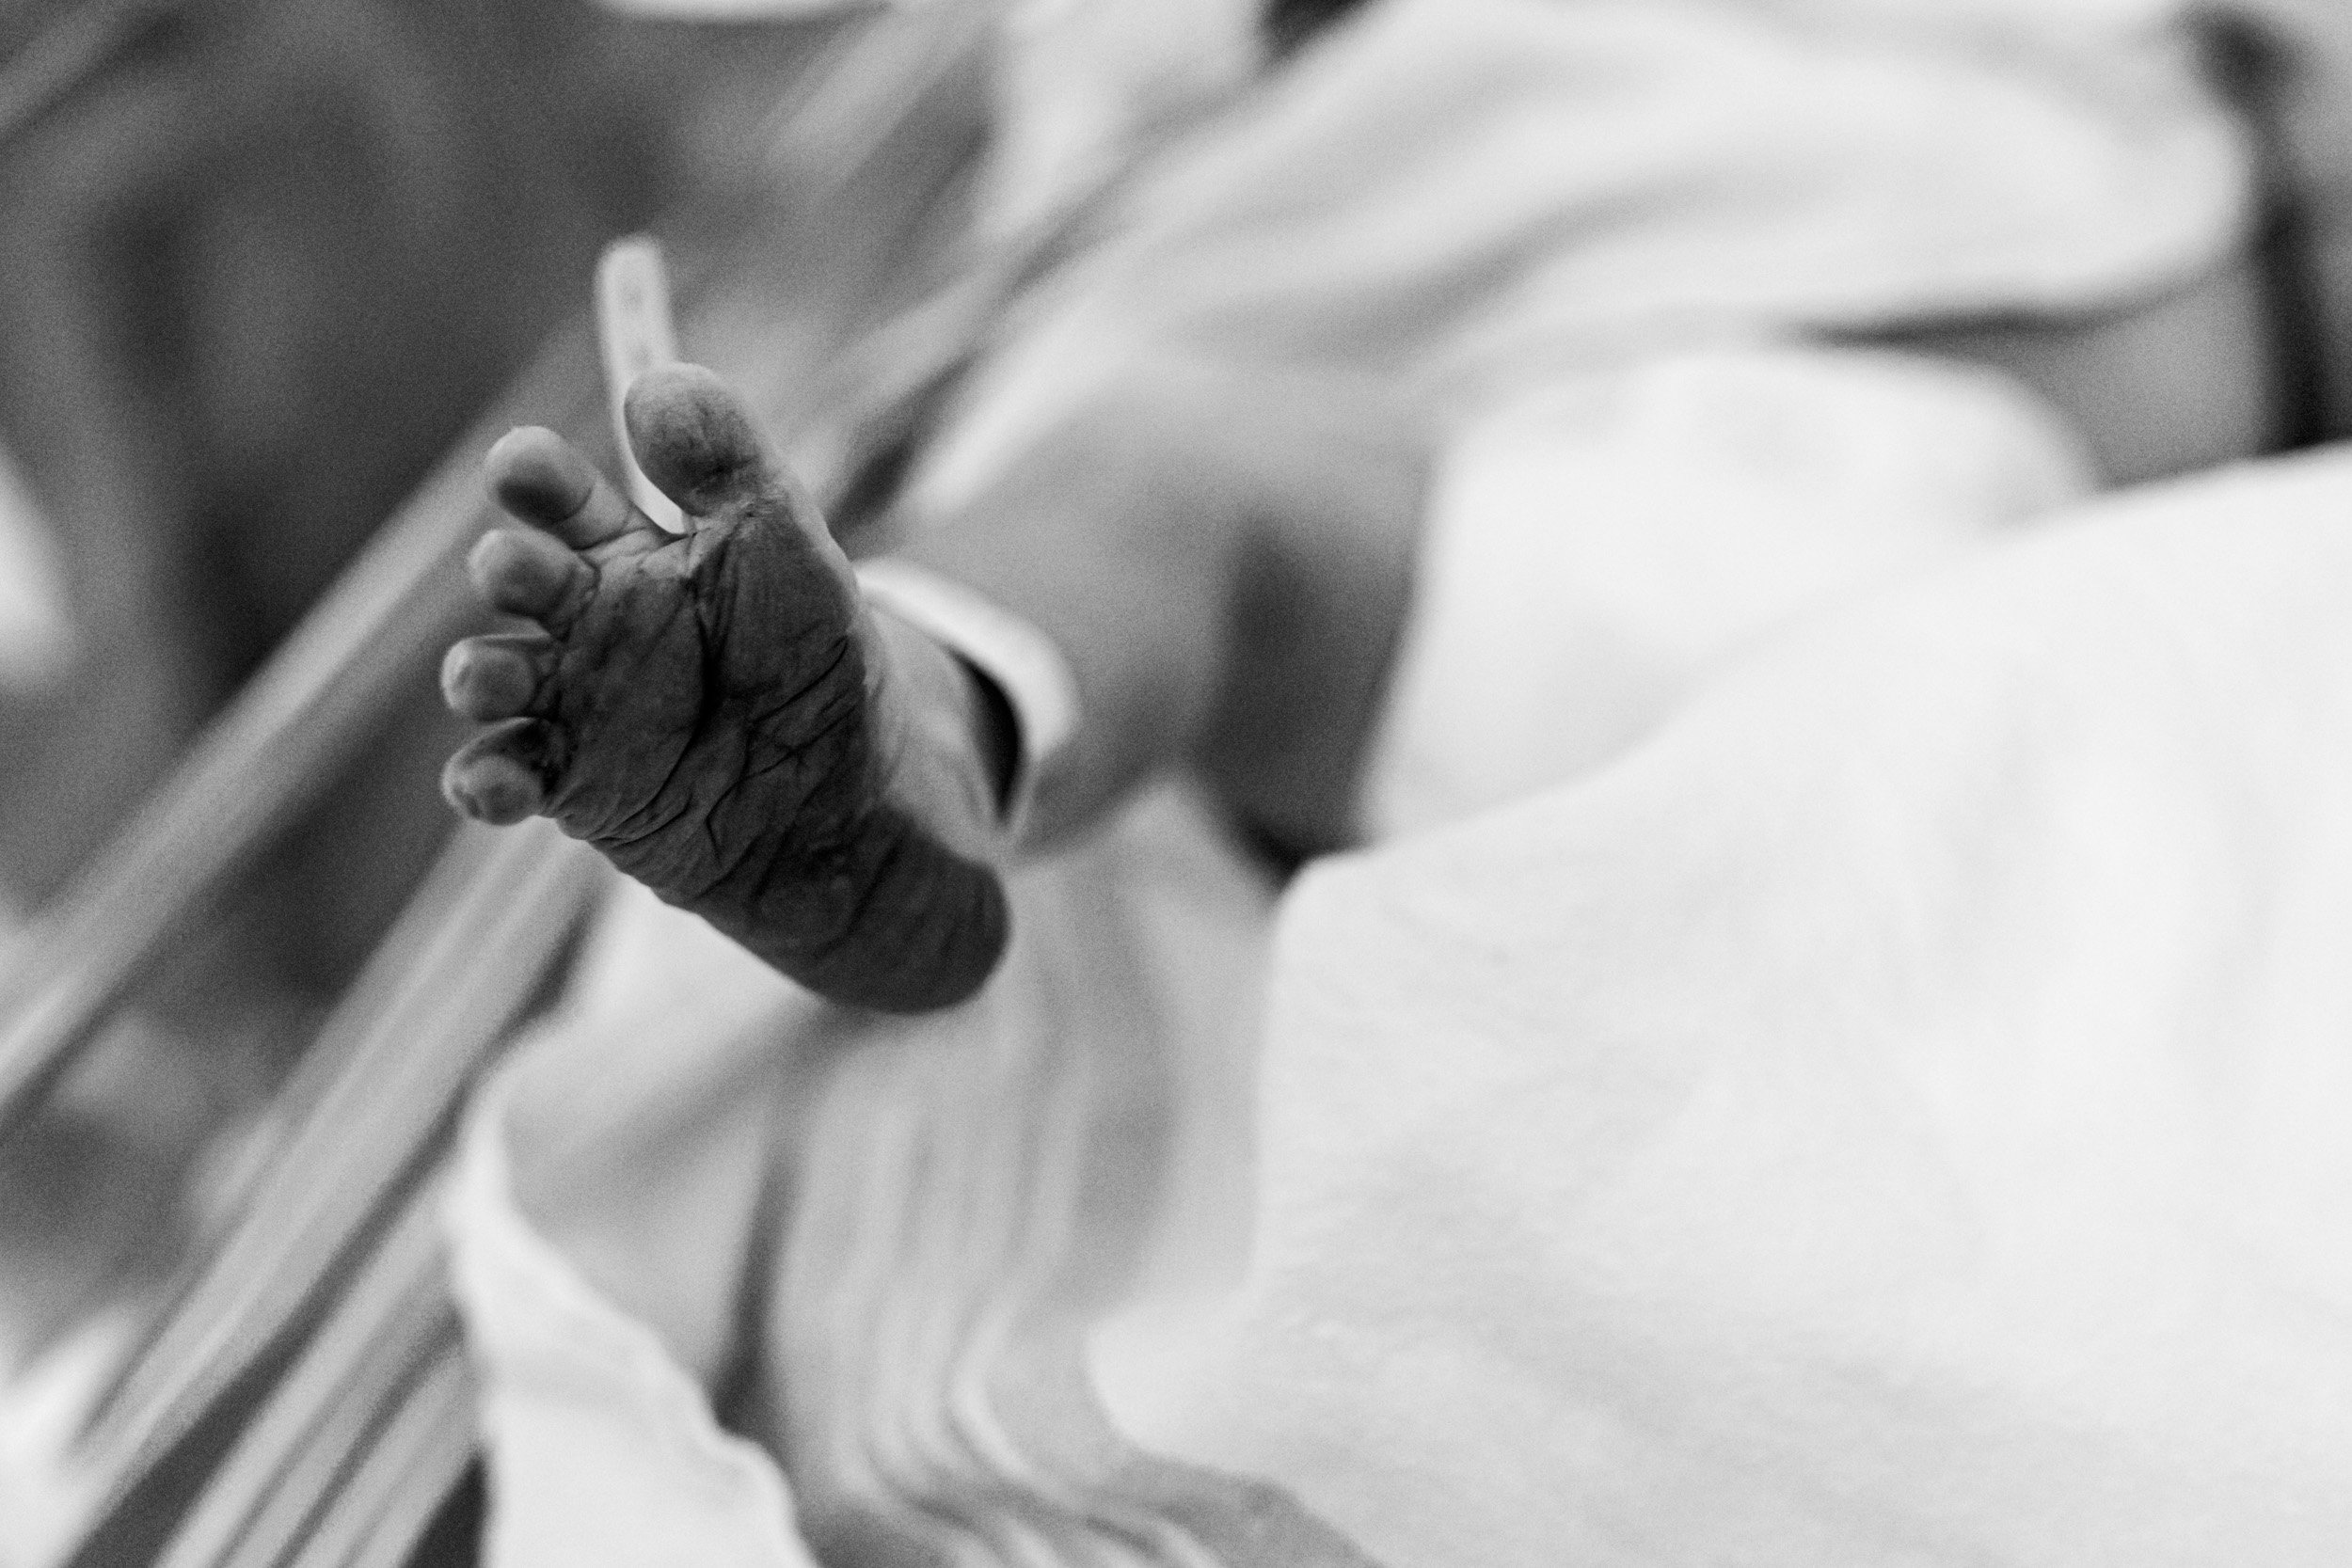 newborn baby foot